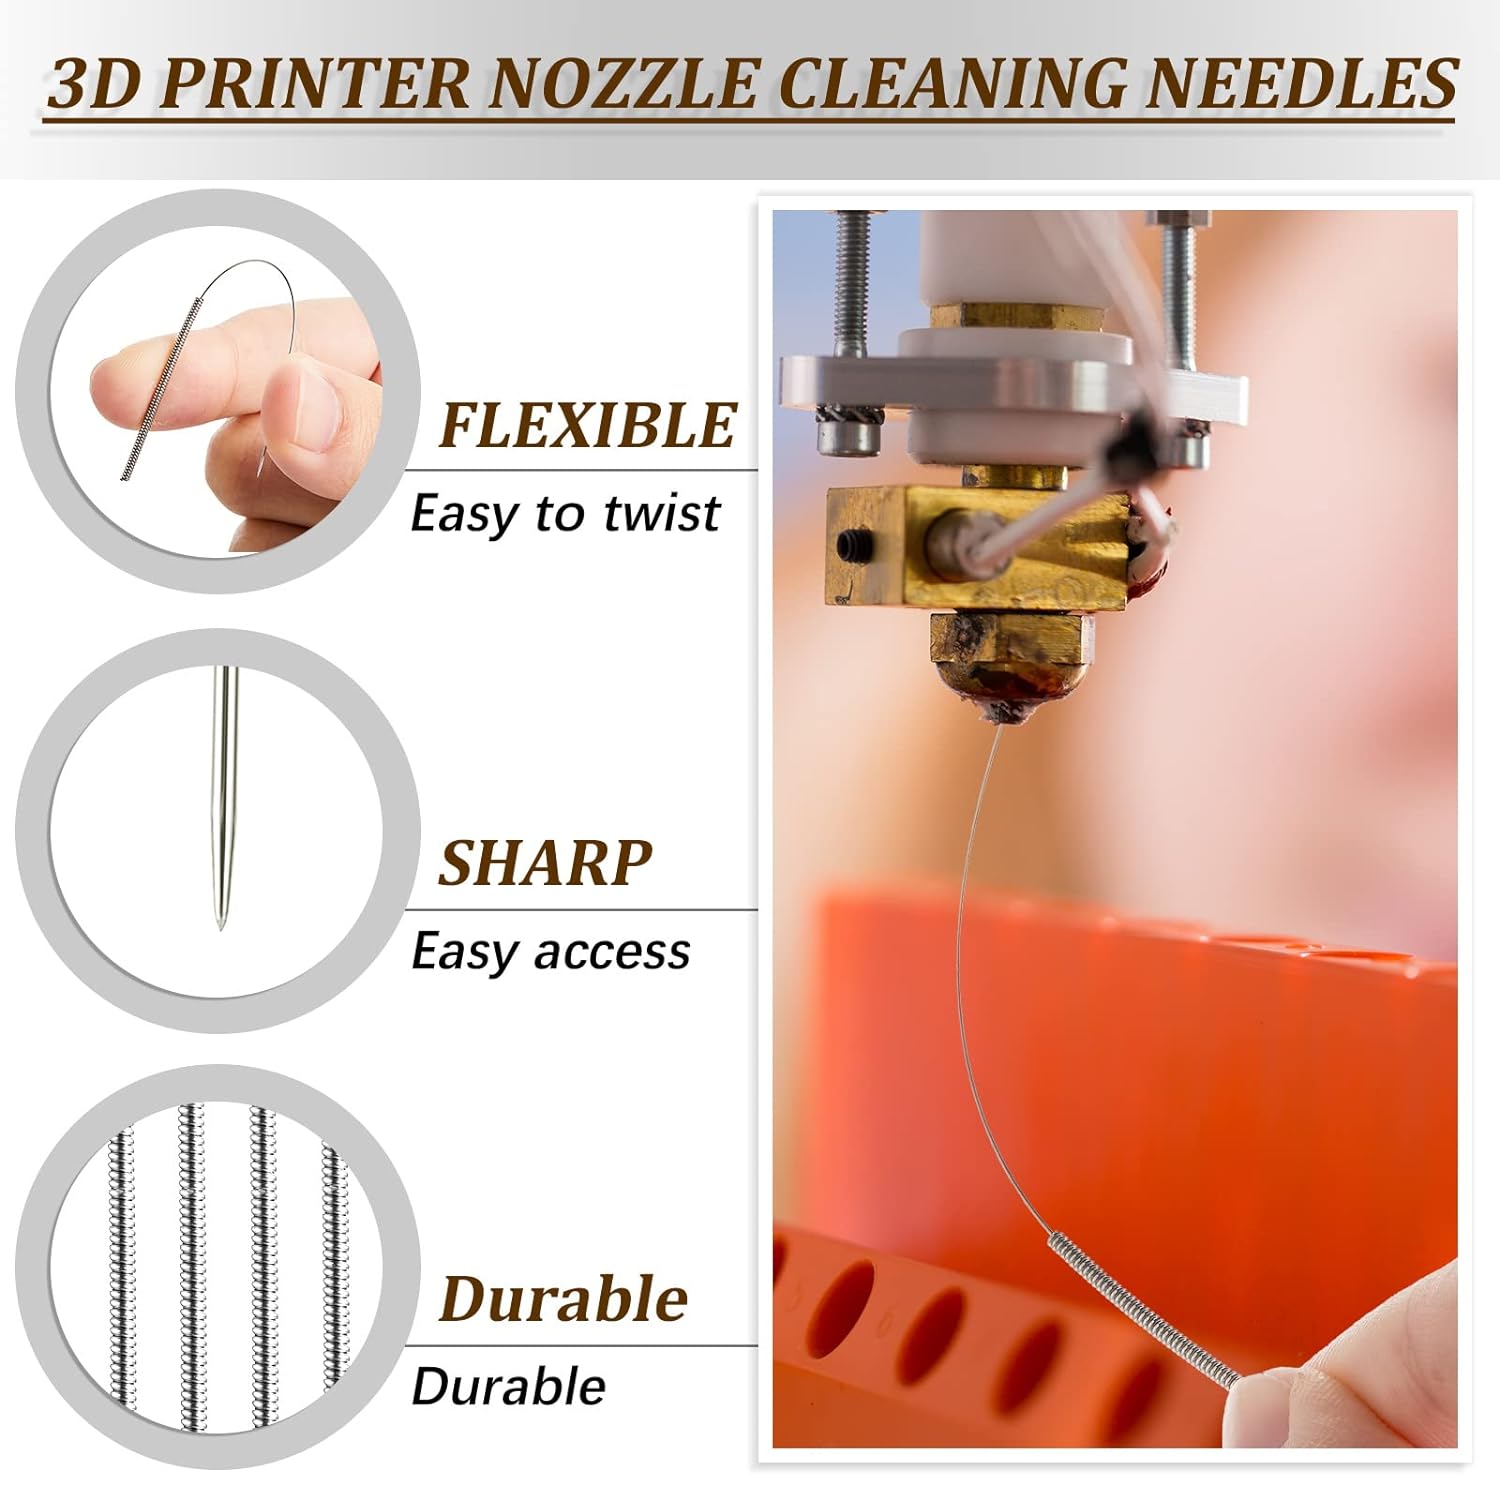 16 Pieces 3D Printer Nozzle Cleaning Kit Review